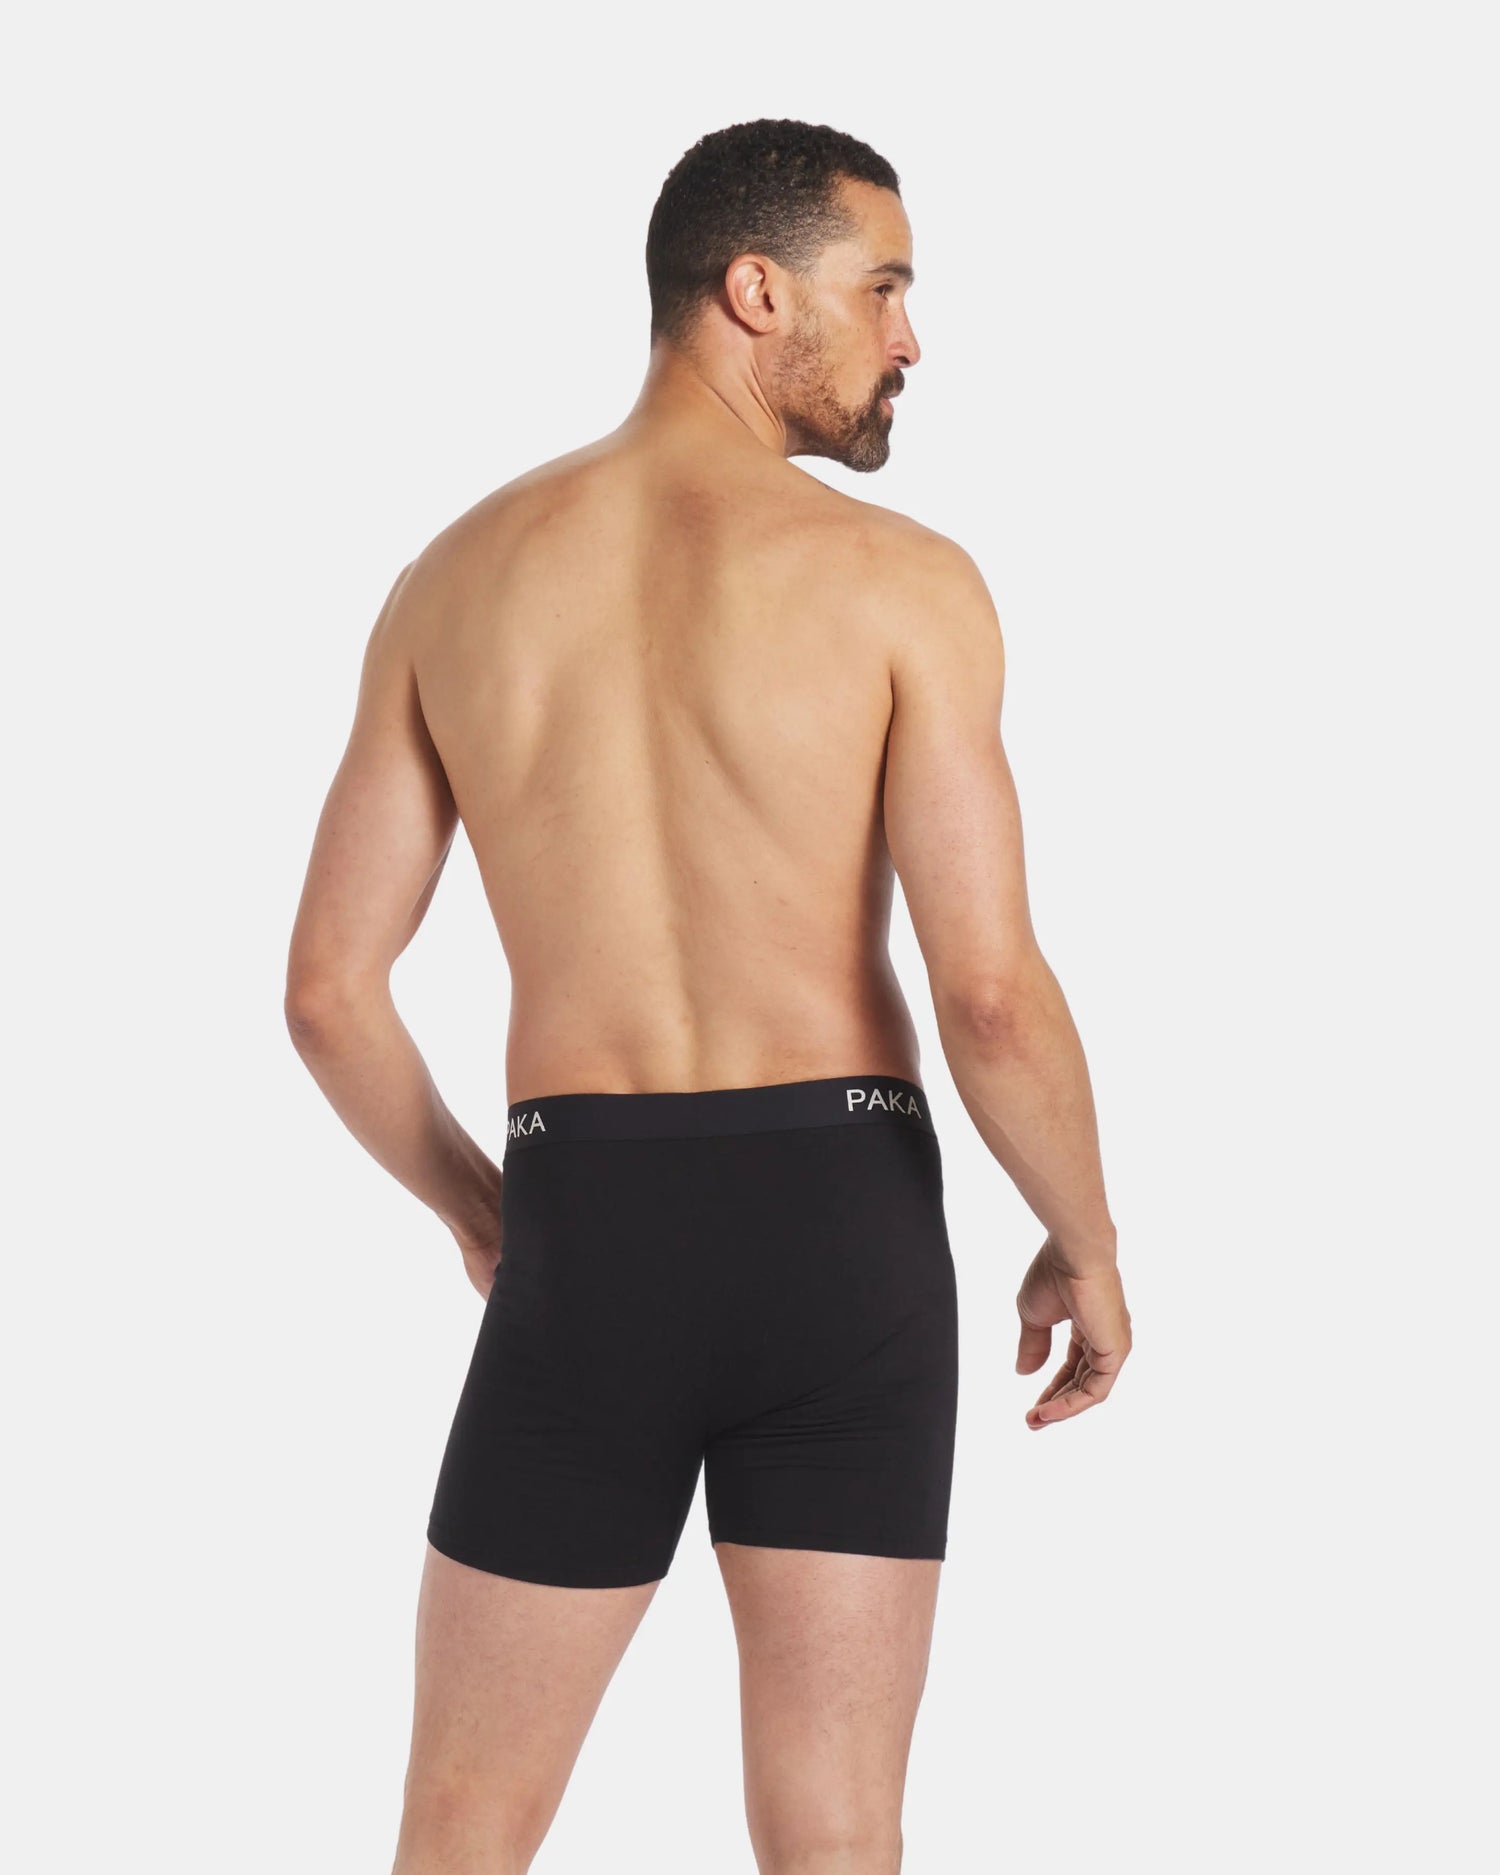 Mens black alpaca underwear briefs on model